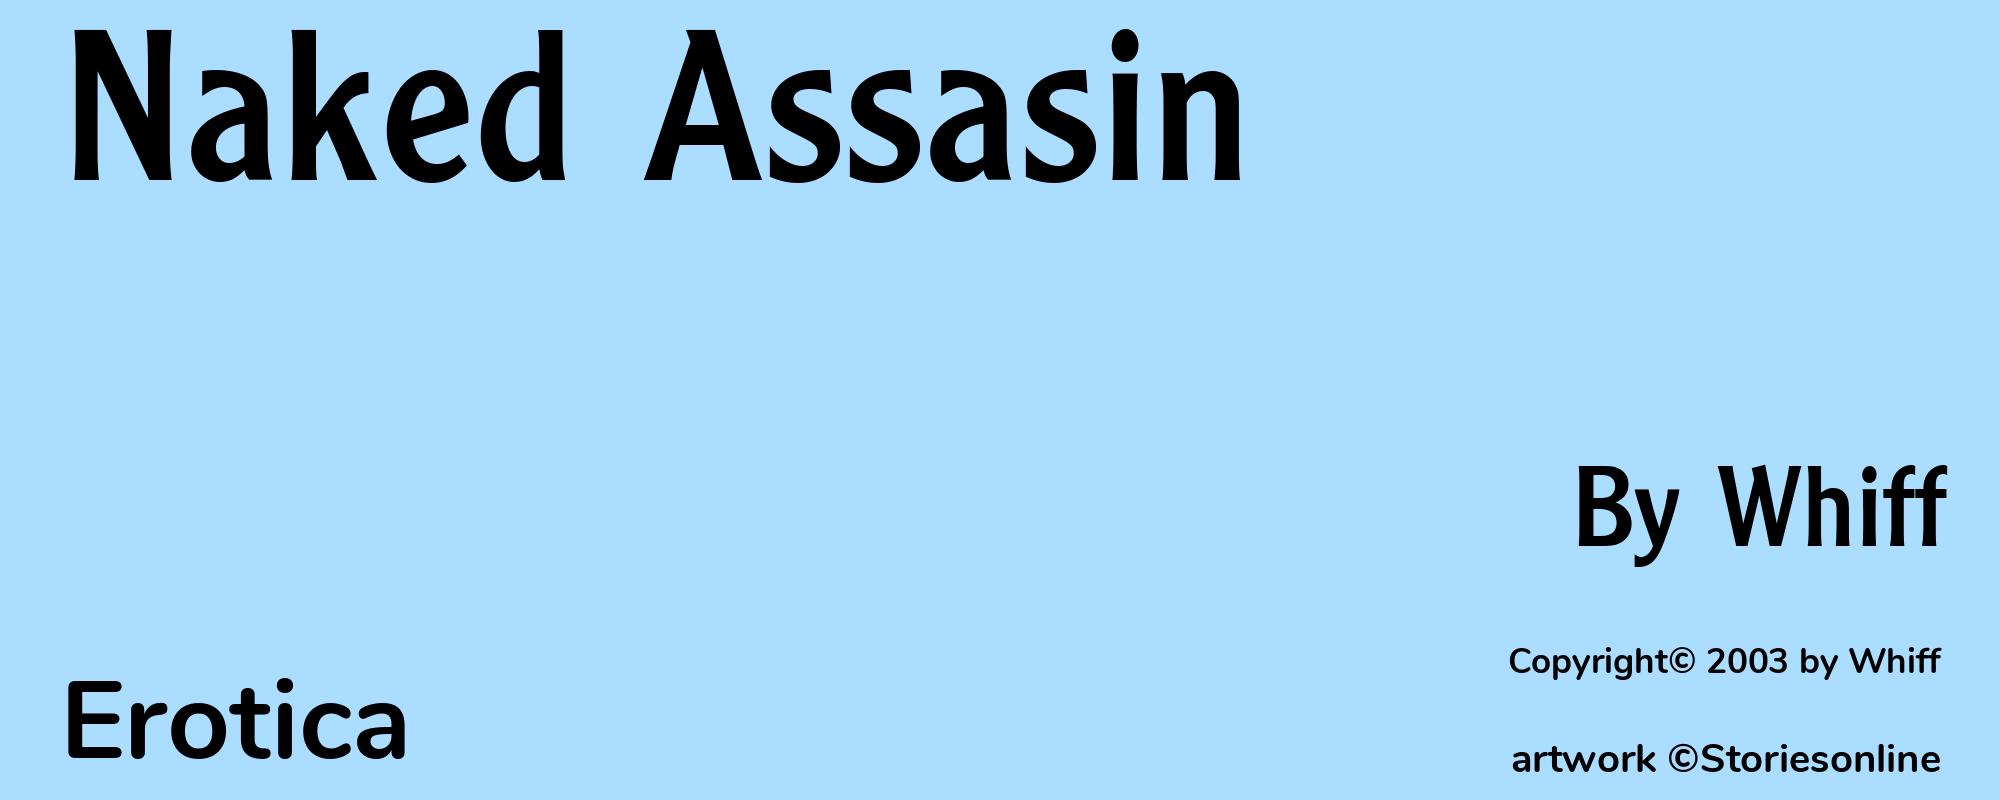 Naked Assasin - Cover